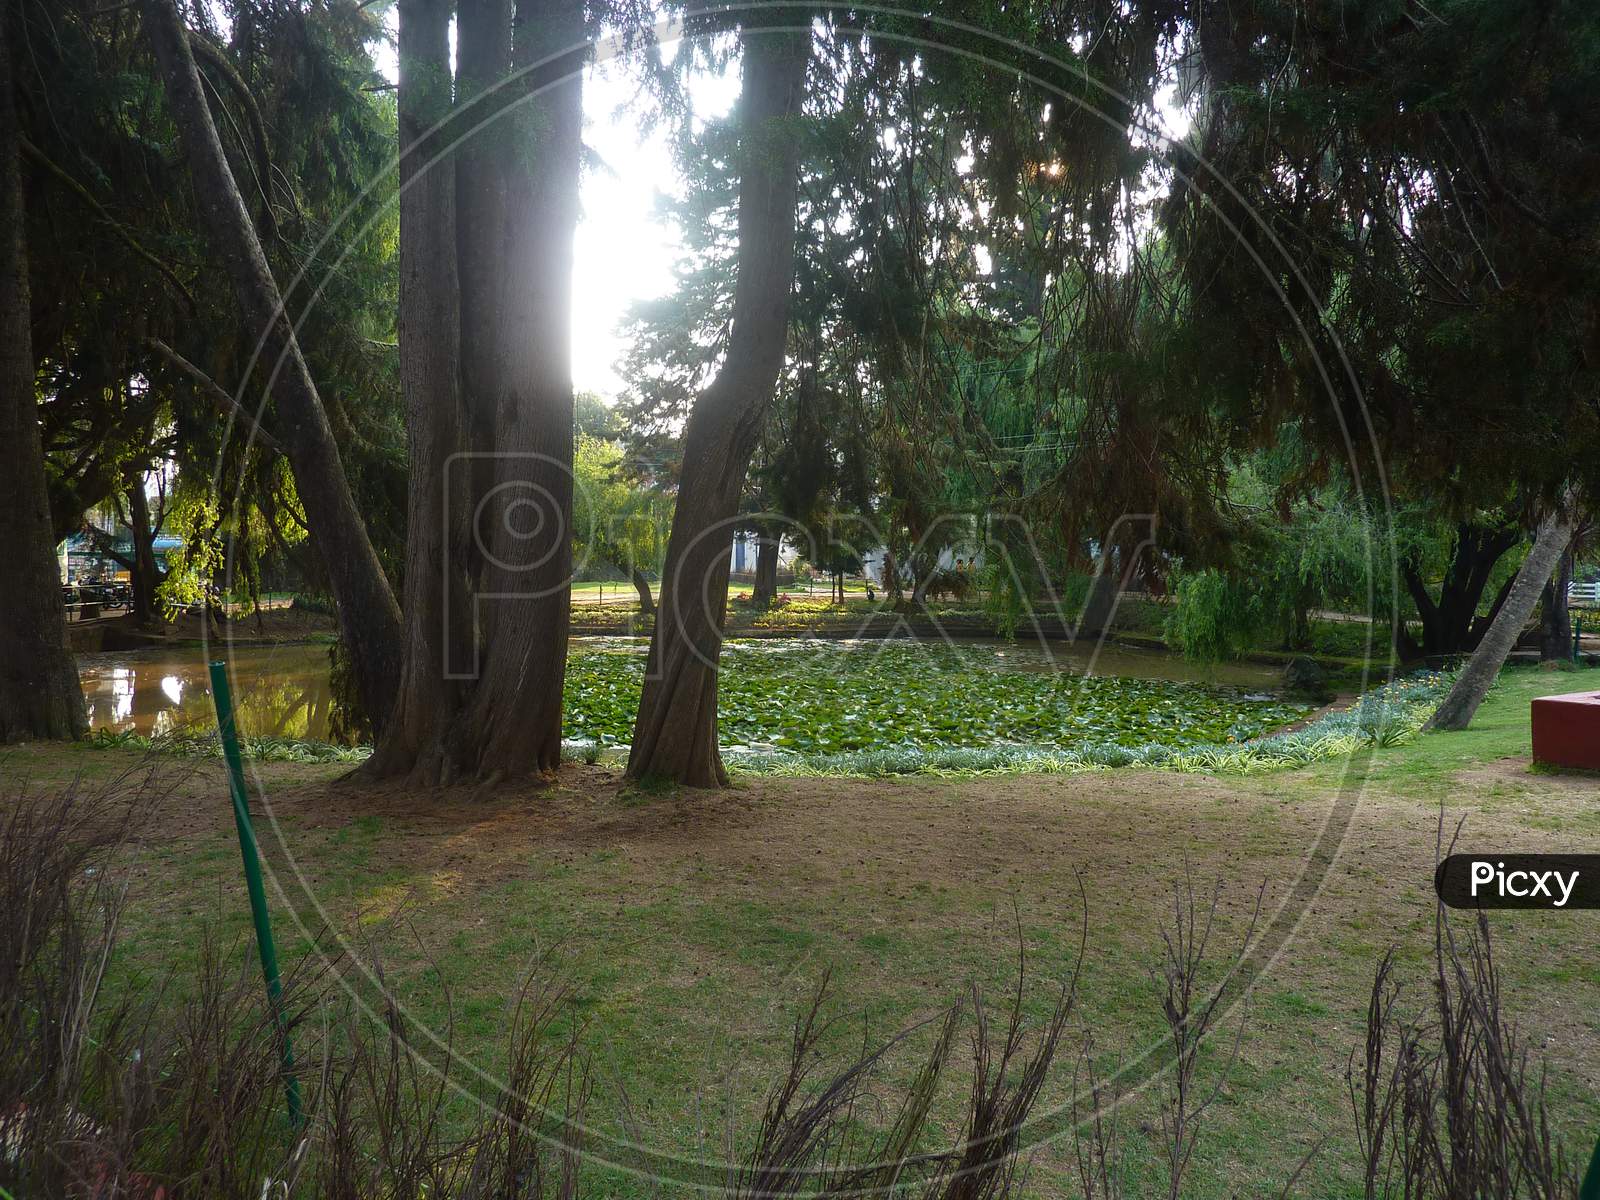 Ooty Botanical Gardens